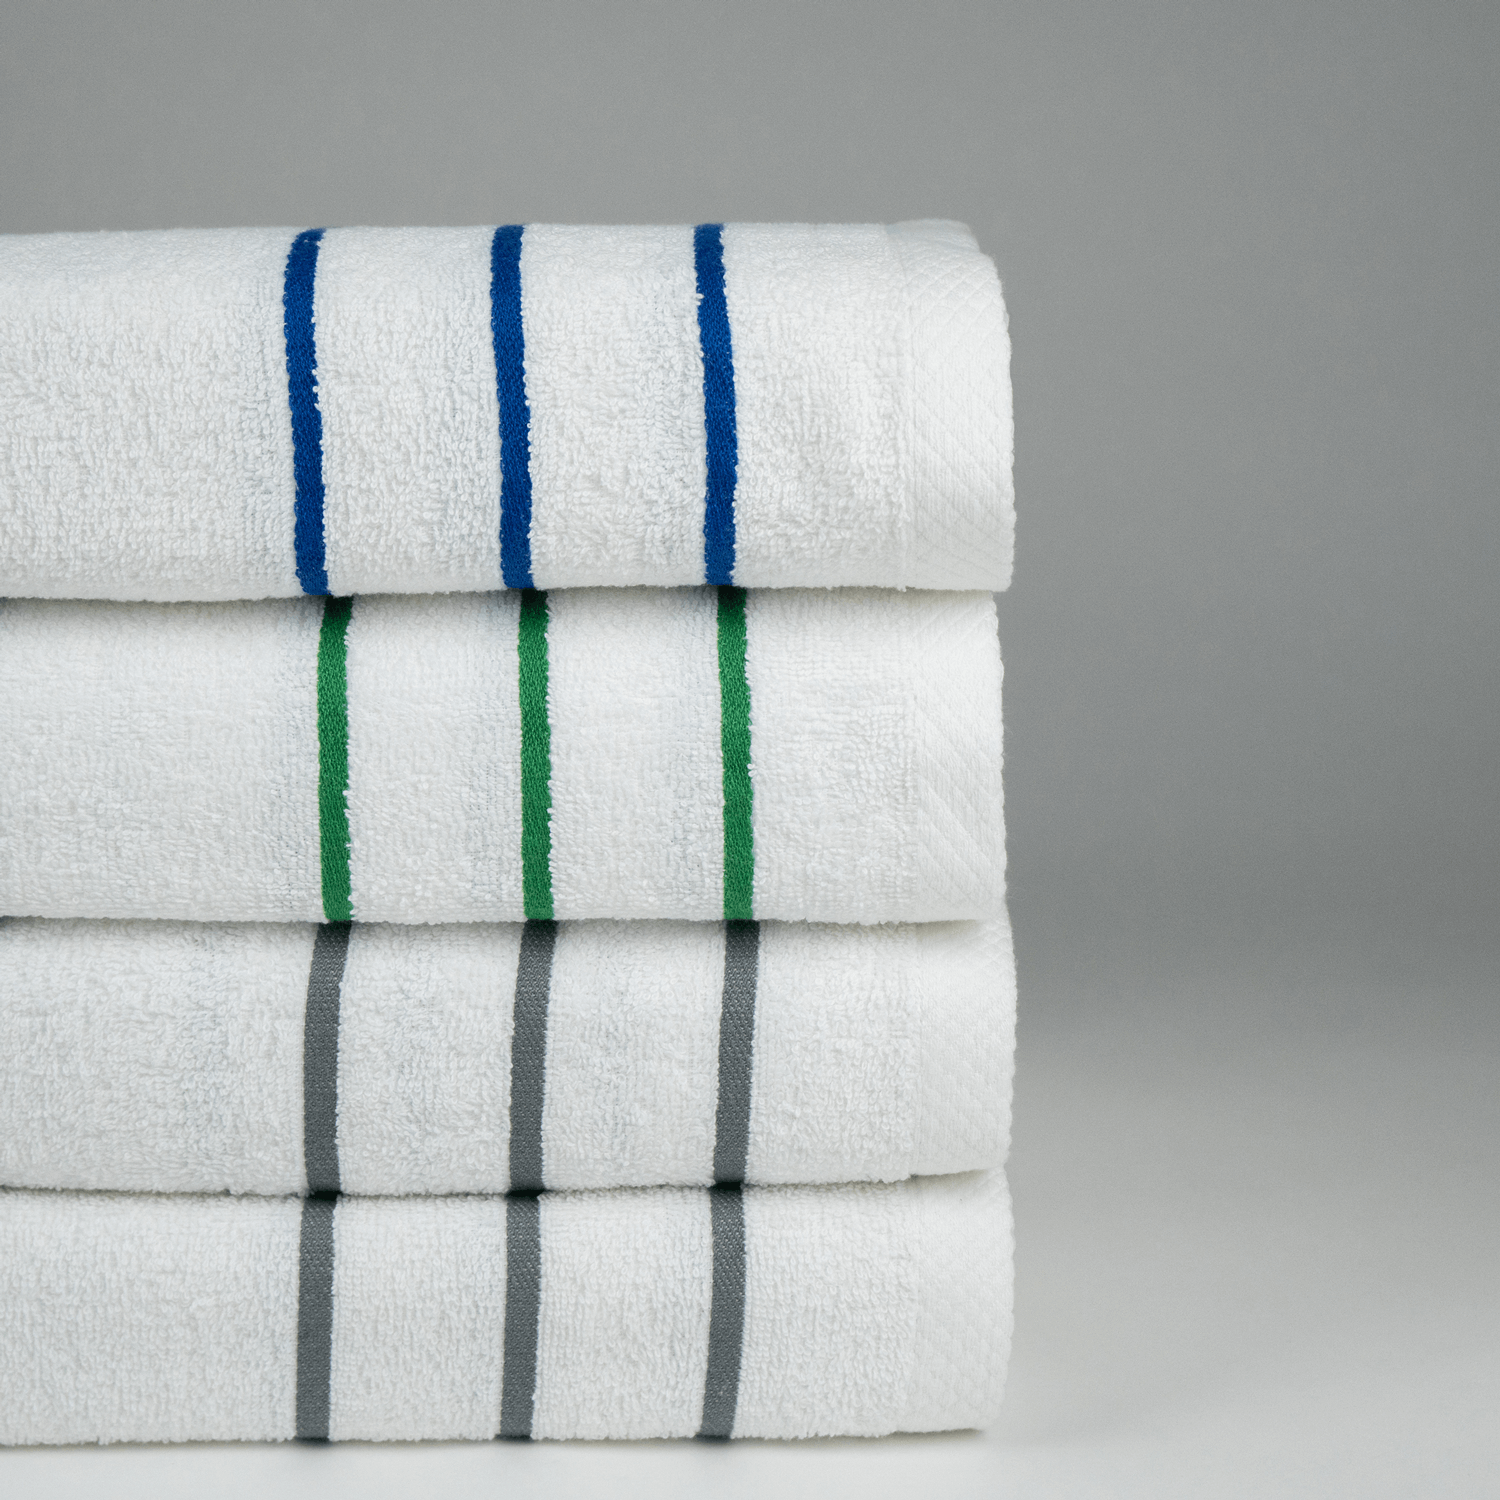 Martex Staybright Pool Towels, Blue